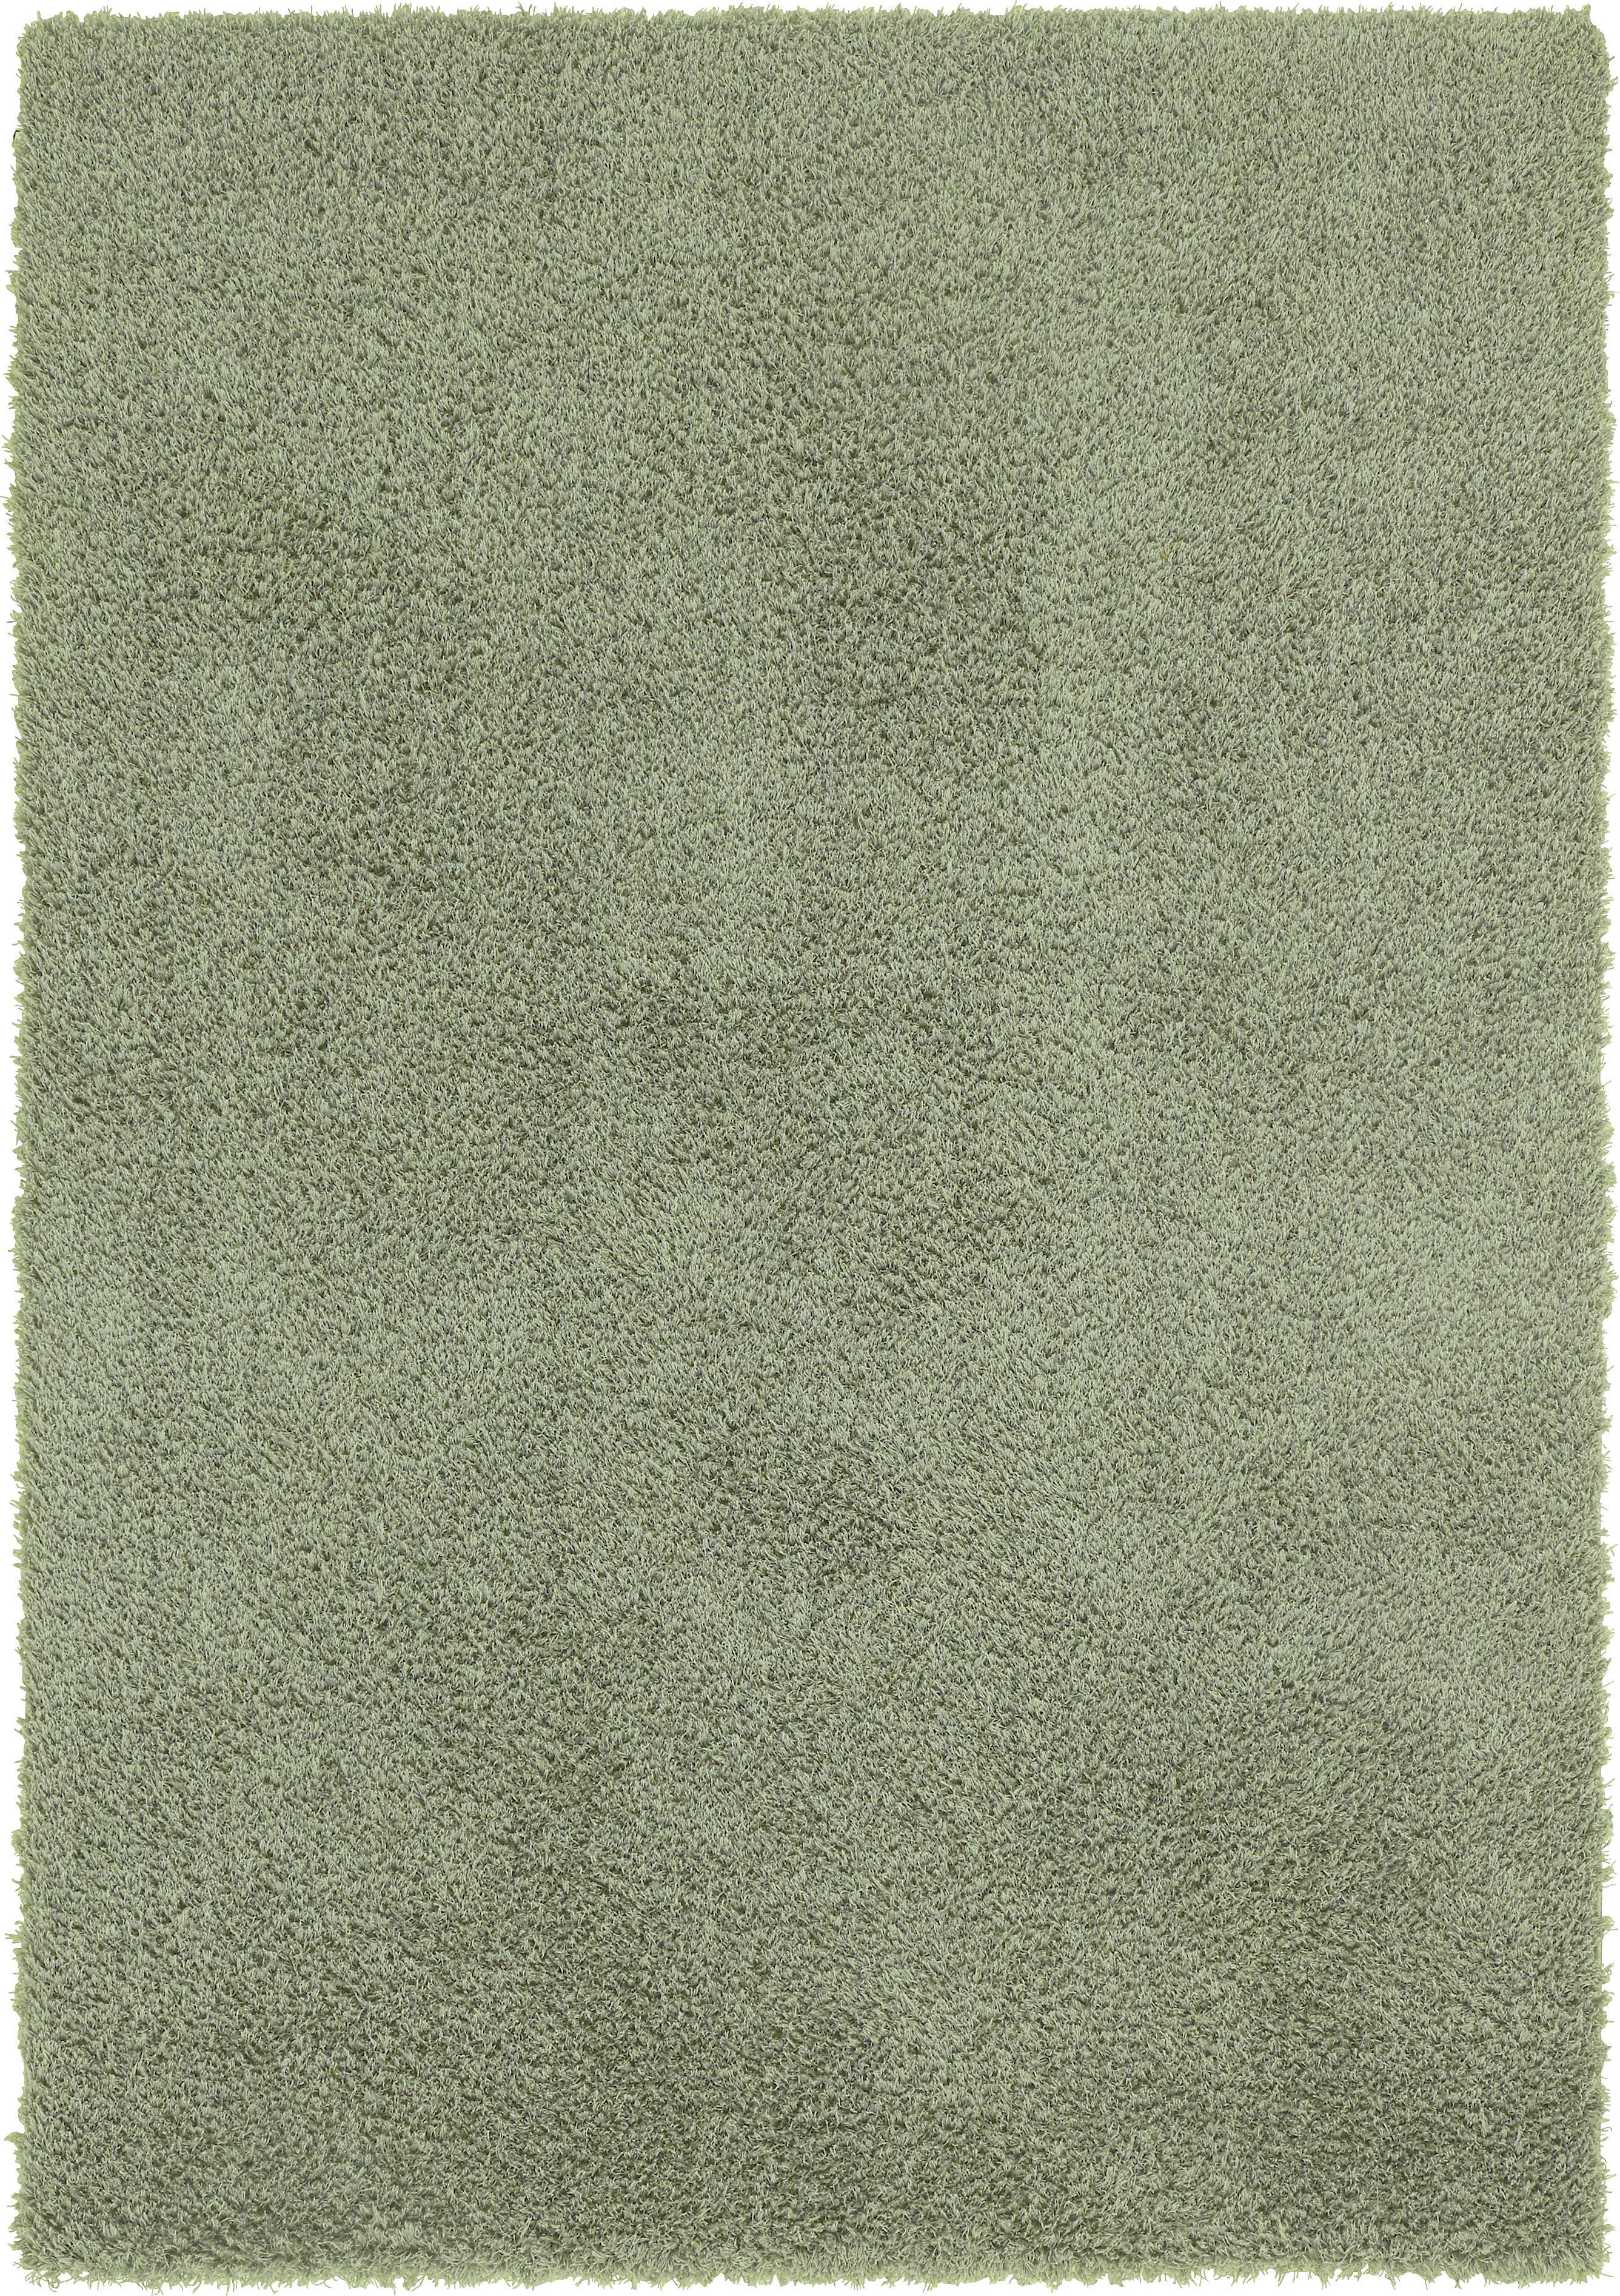 Koberec Shaggy Stefan 3, 160/230cm, Zelená - zelená, Moderný, textil (160/230cm) - Modern Living